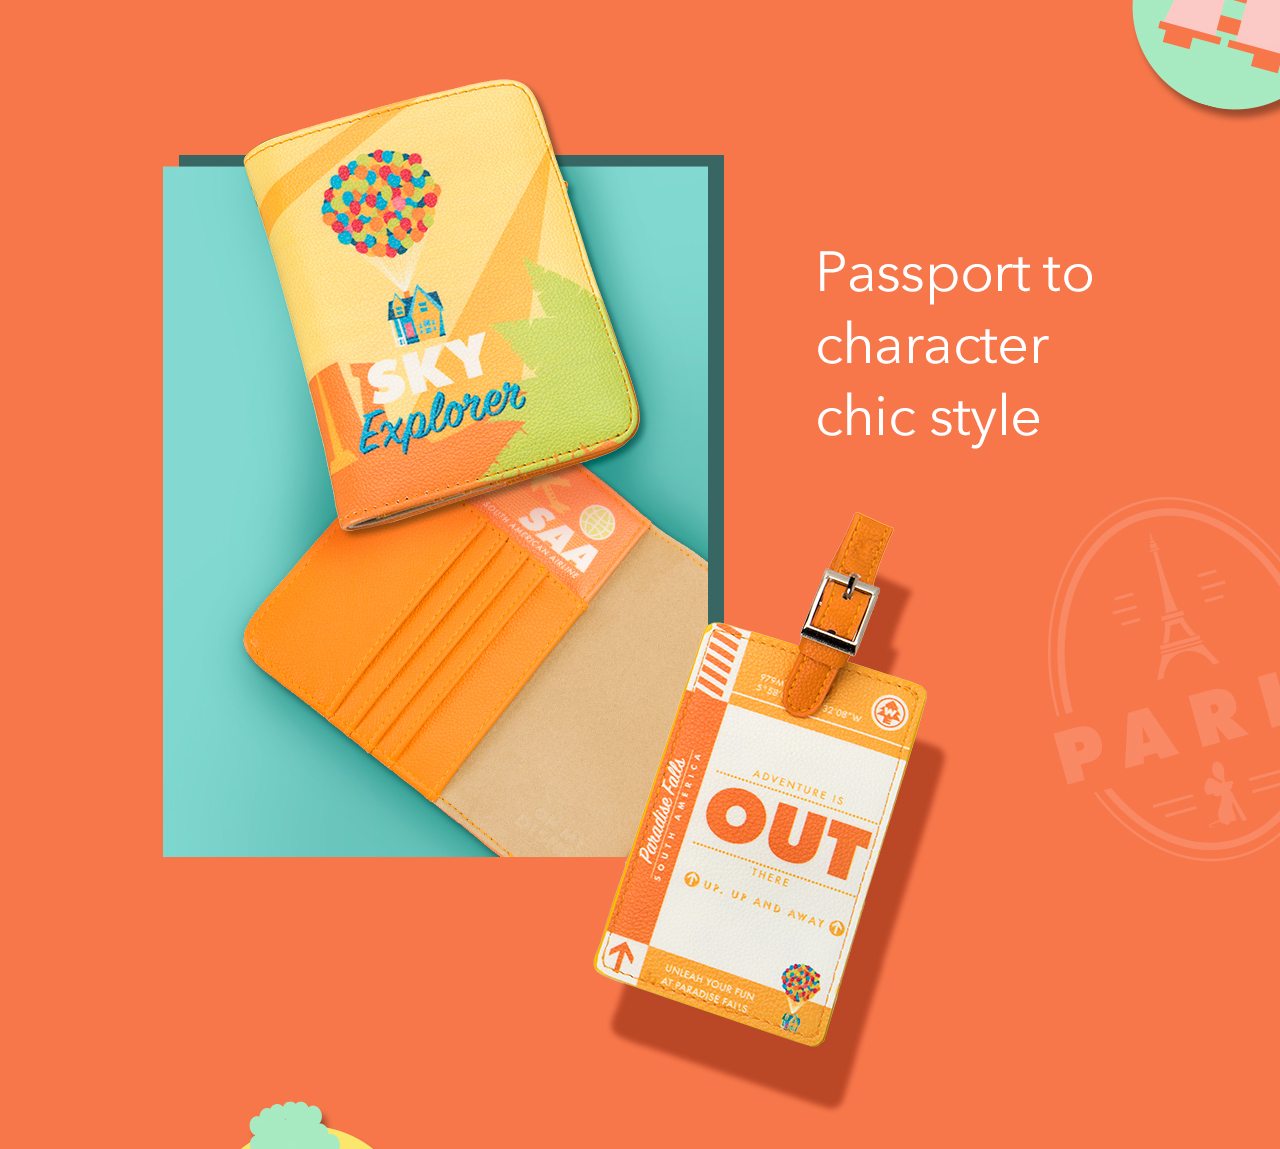 Passport to character chic style